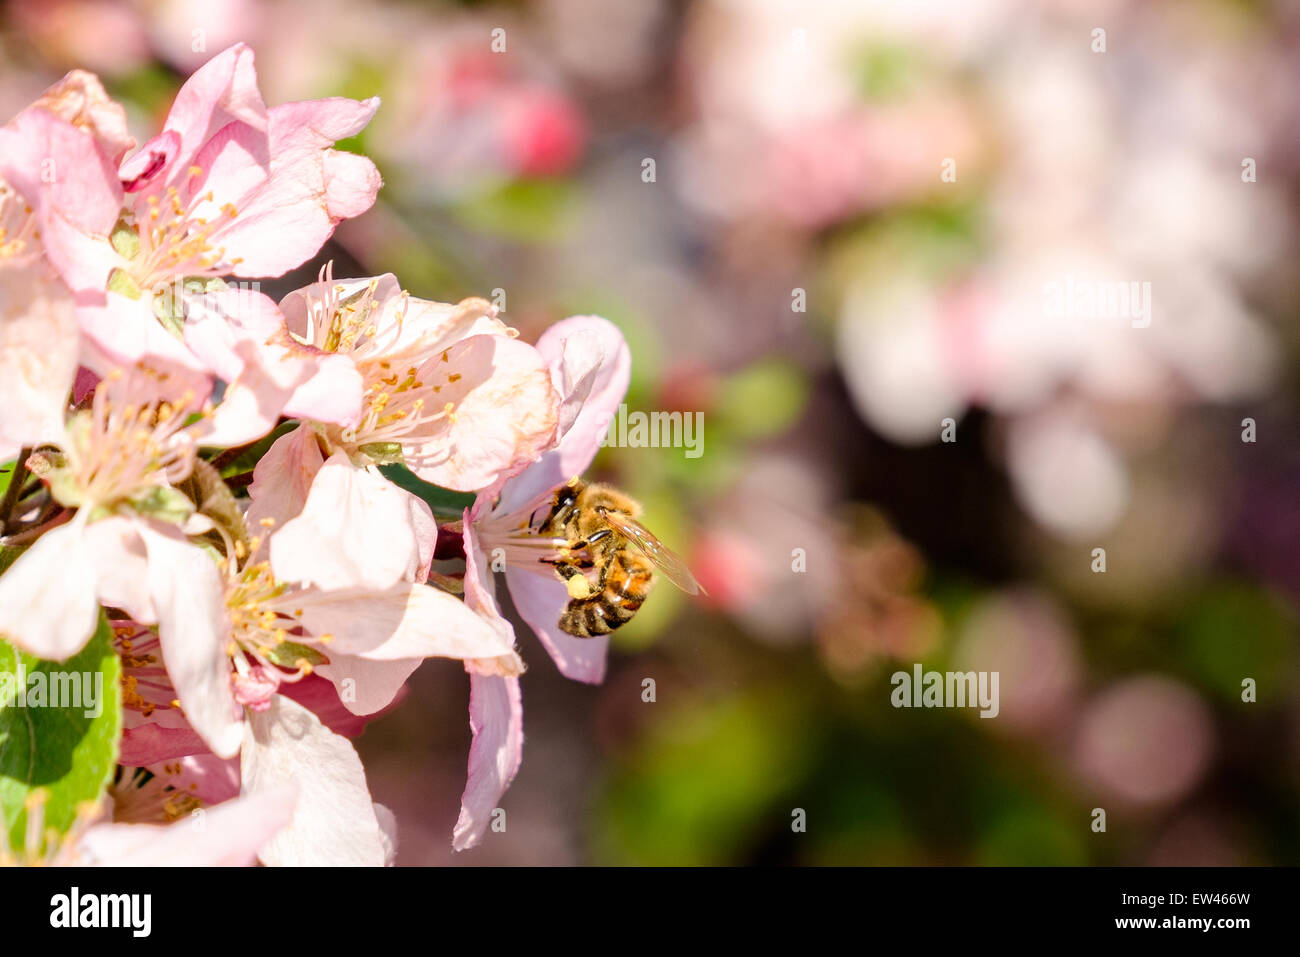 Una abeja recoge polen de crabapple, Malus, florece en la primavera. Foto de stock